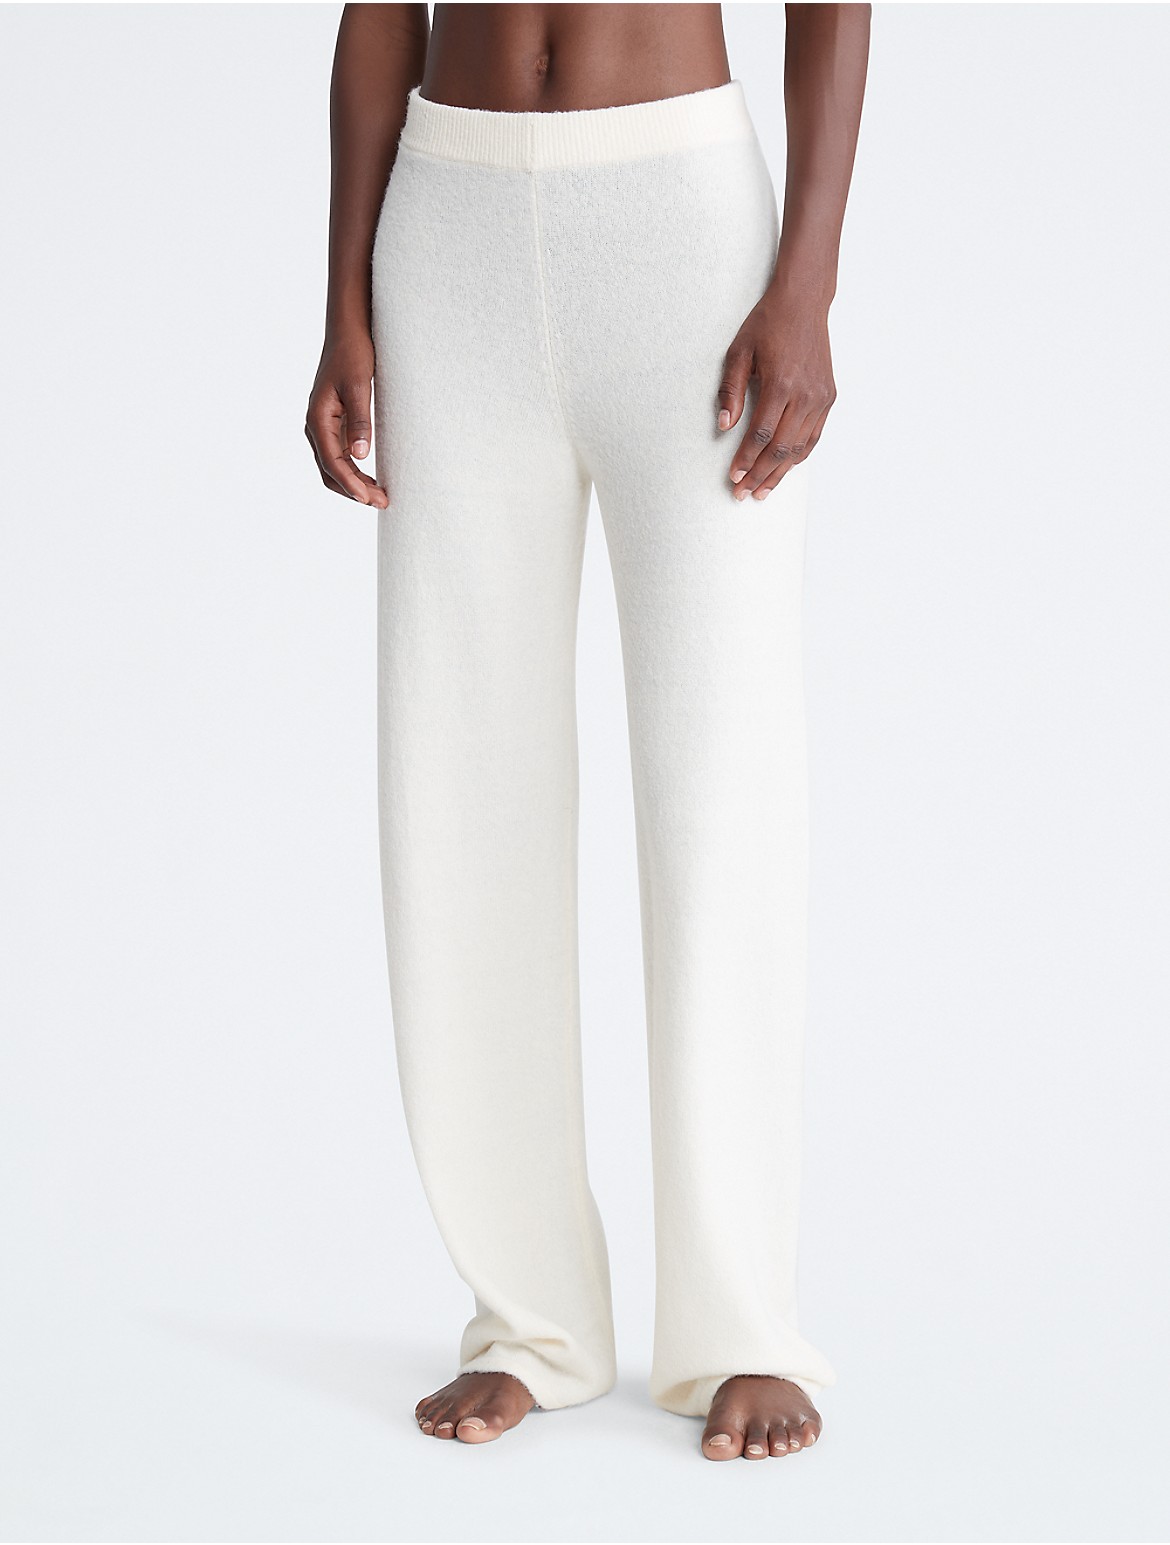 Calvin Klein Women's Sweater Lounge Plush Sleep Pants - White - XS